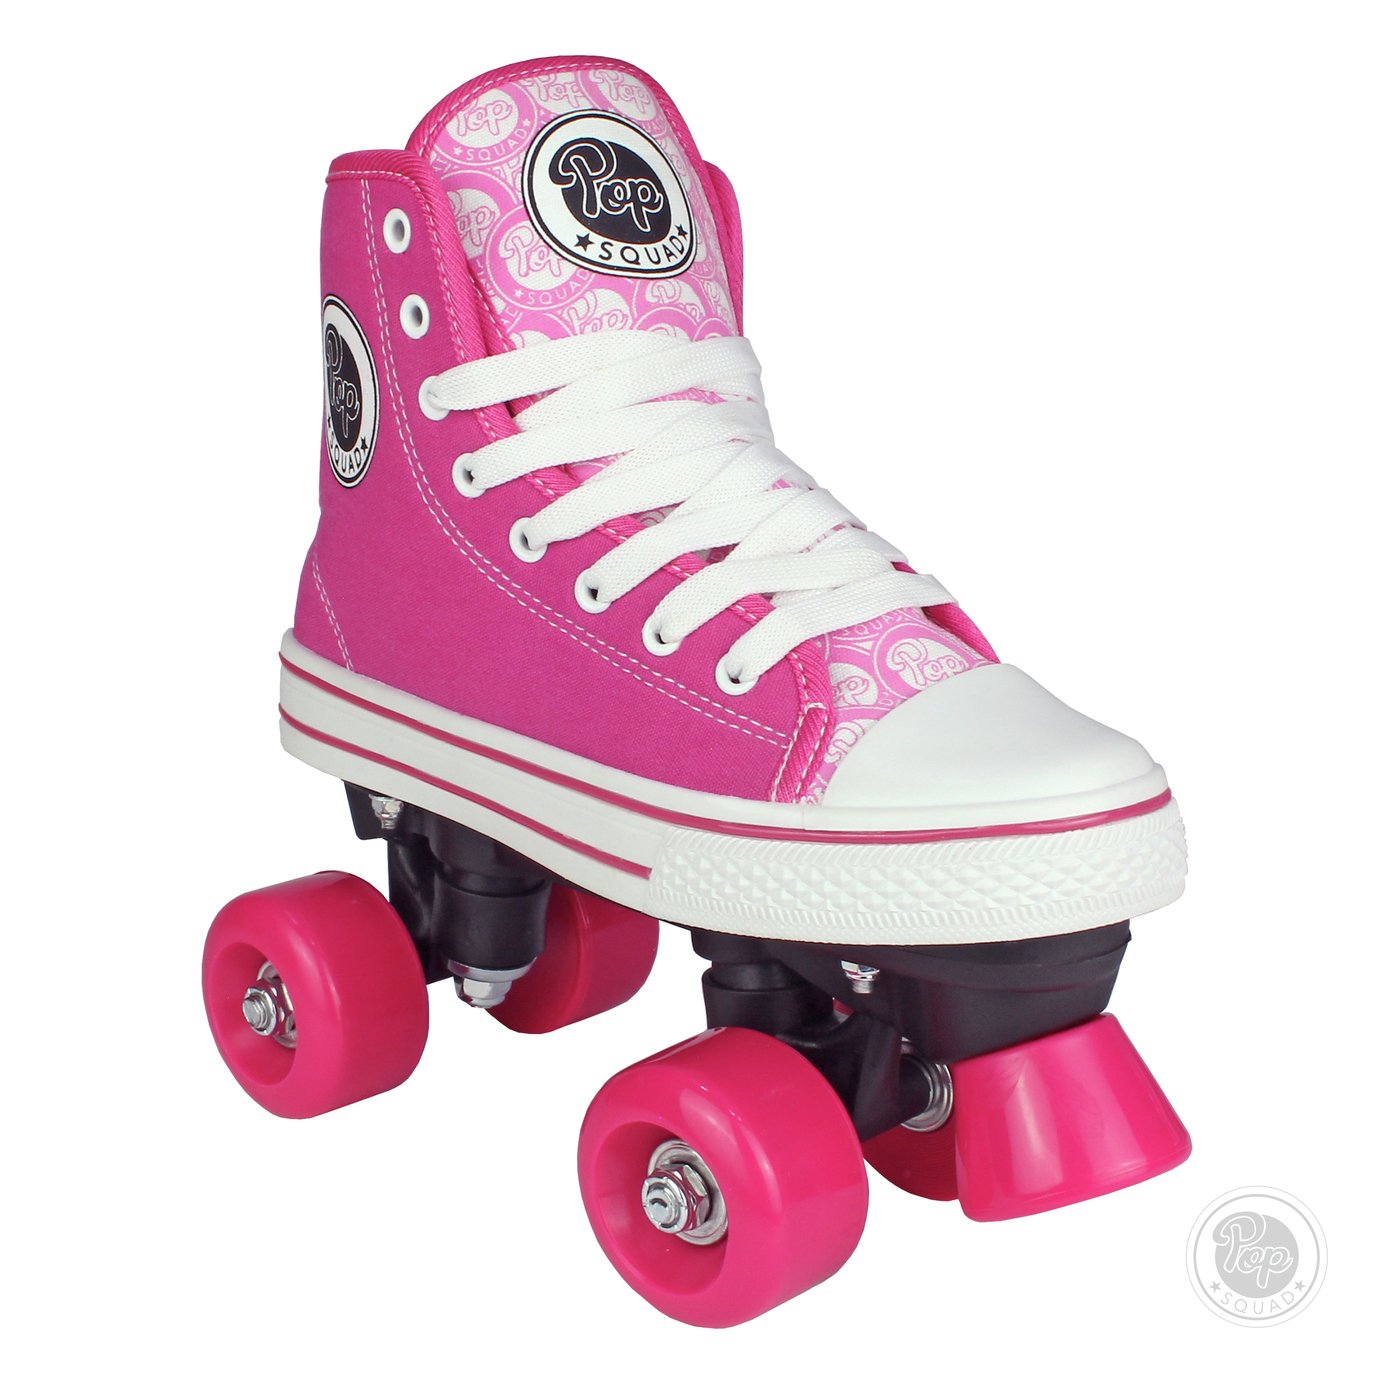 Pop Squad Pink Midtown Quad Skate - Size 2